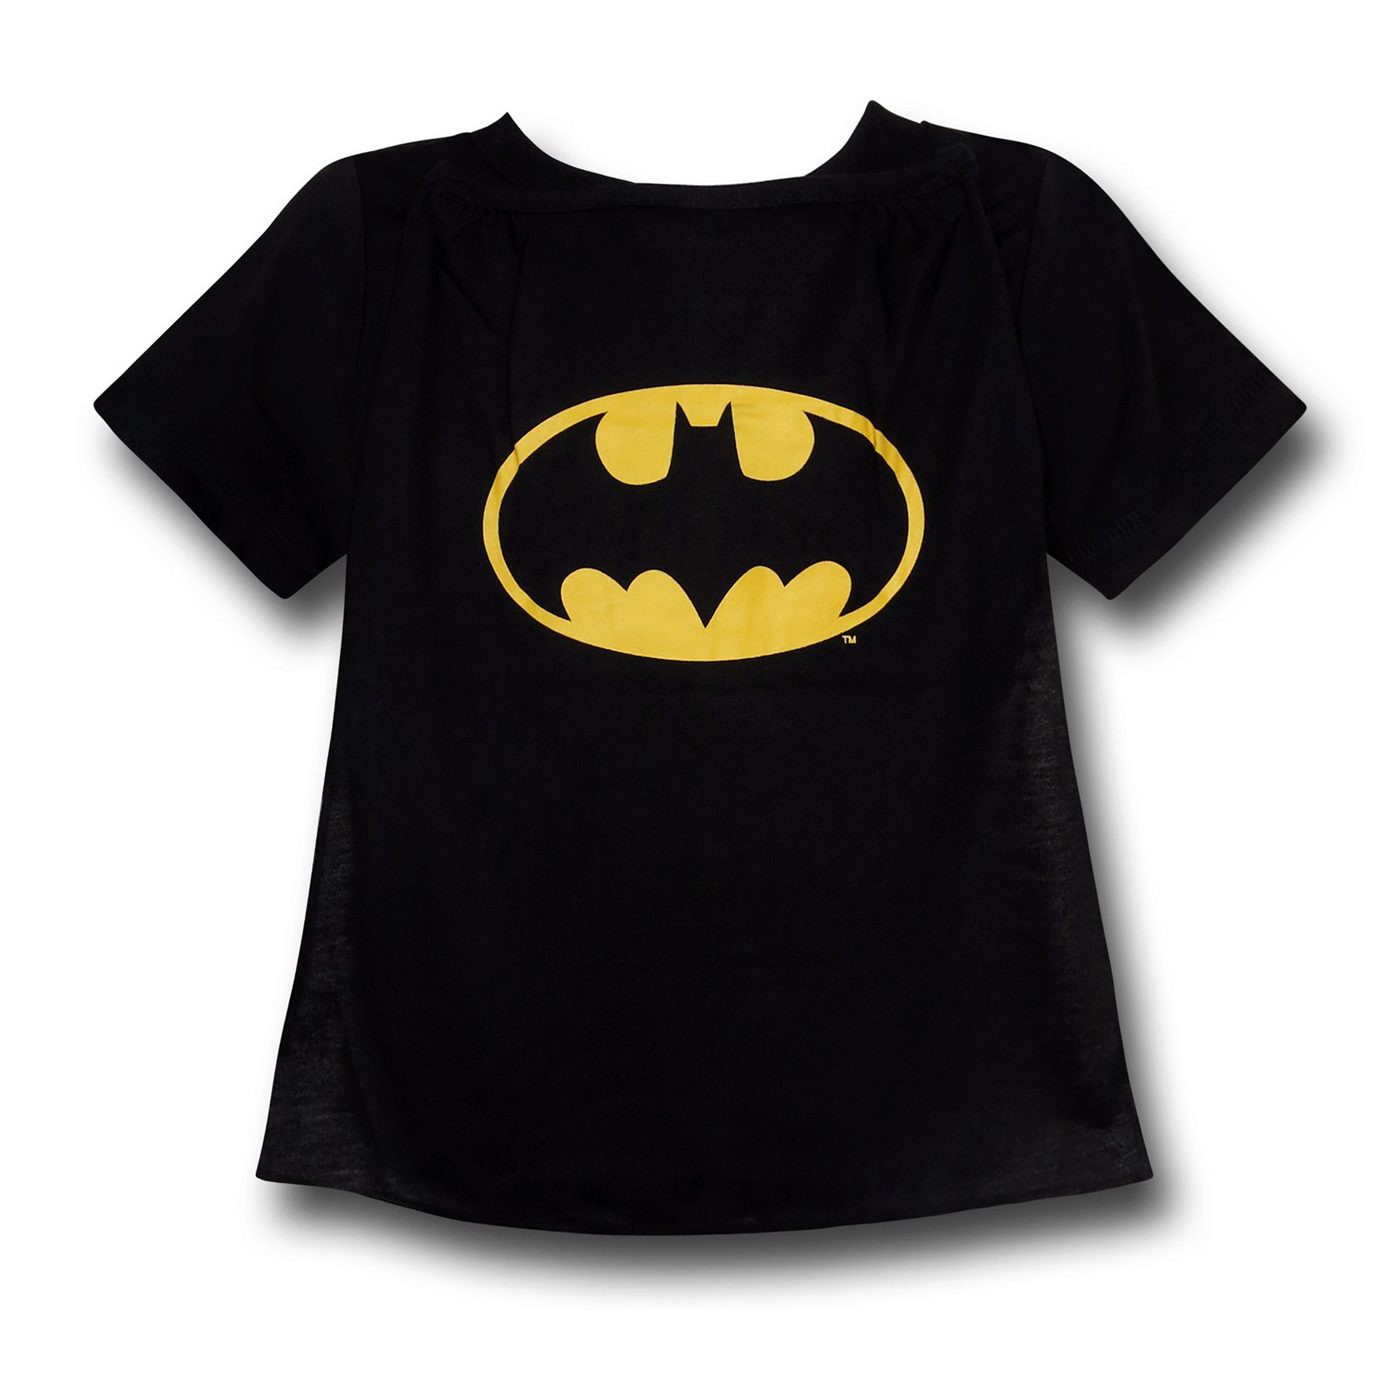 Batman Caped Costume Kids PJ Sleep Set